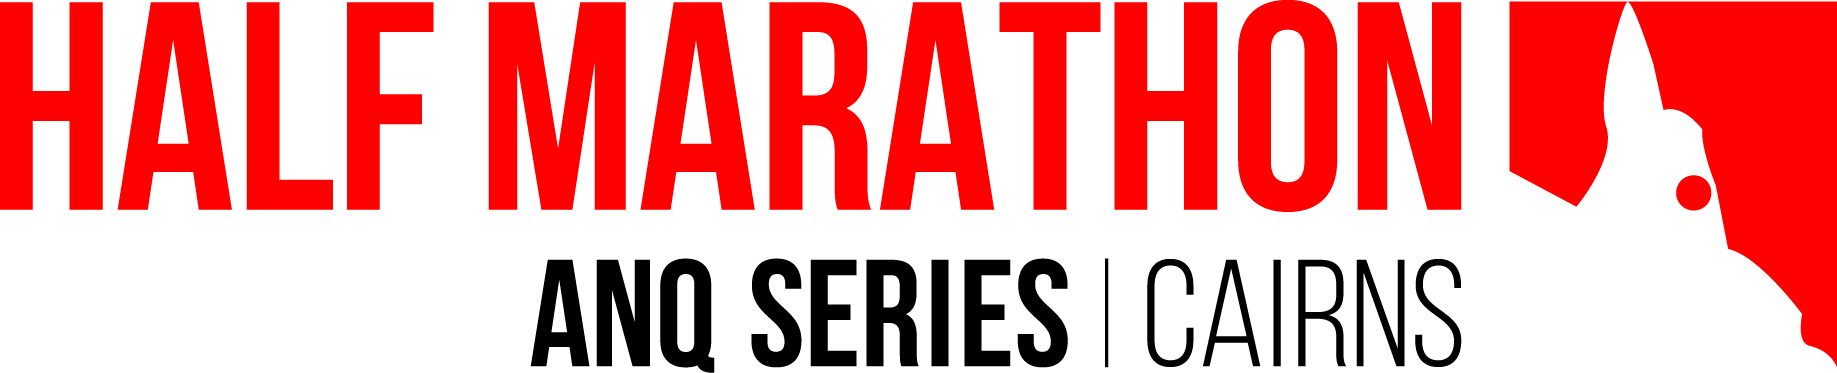 2015 CAIRNS Half Marathon Series logo_highres CMYK